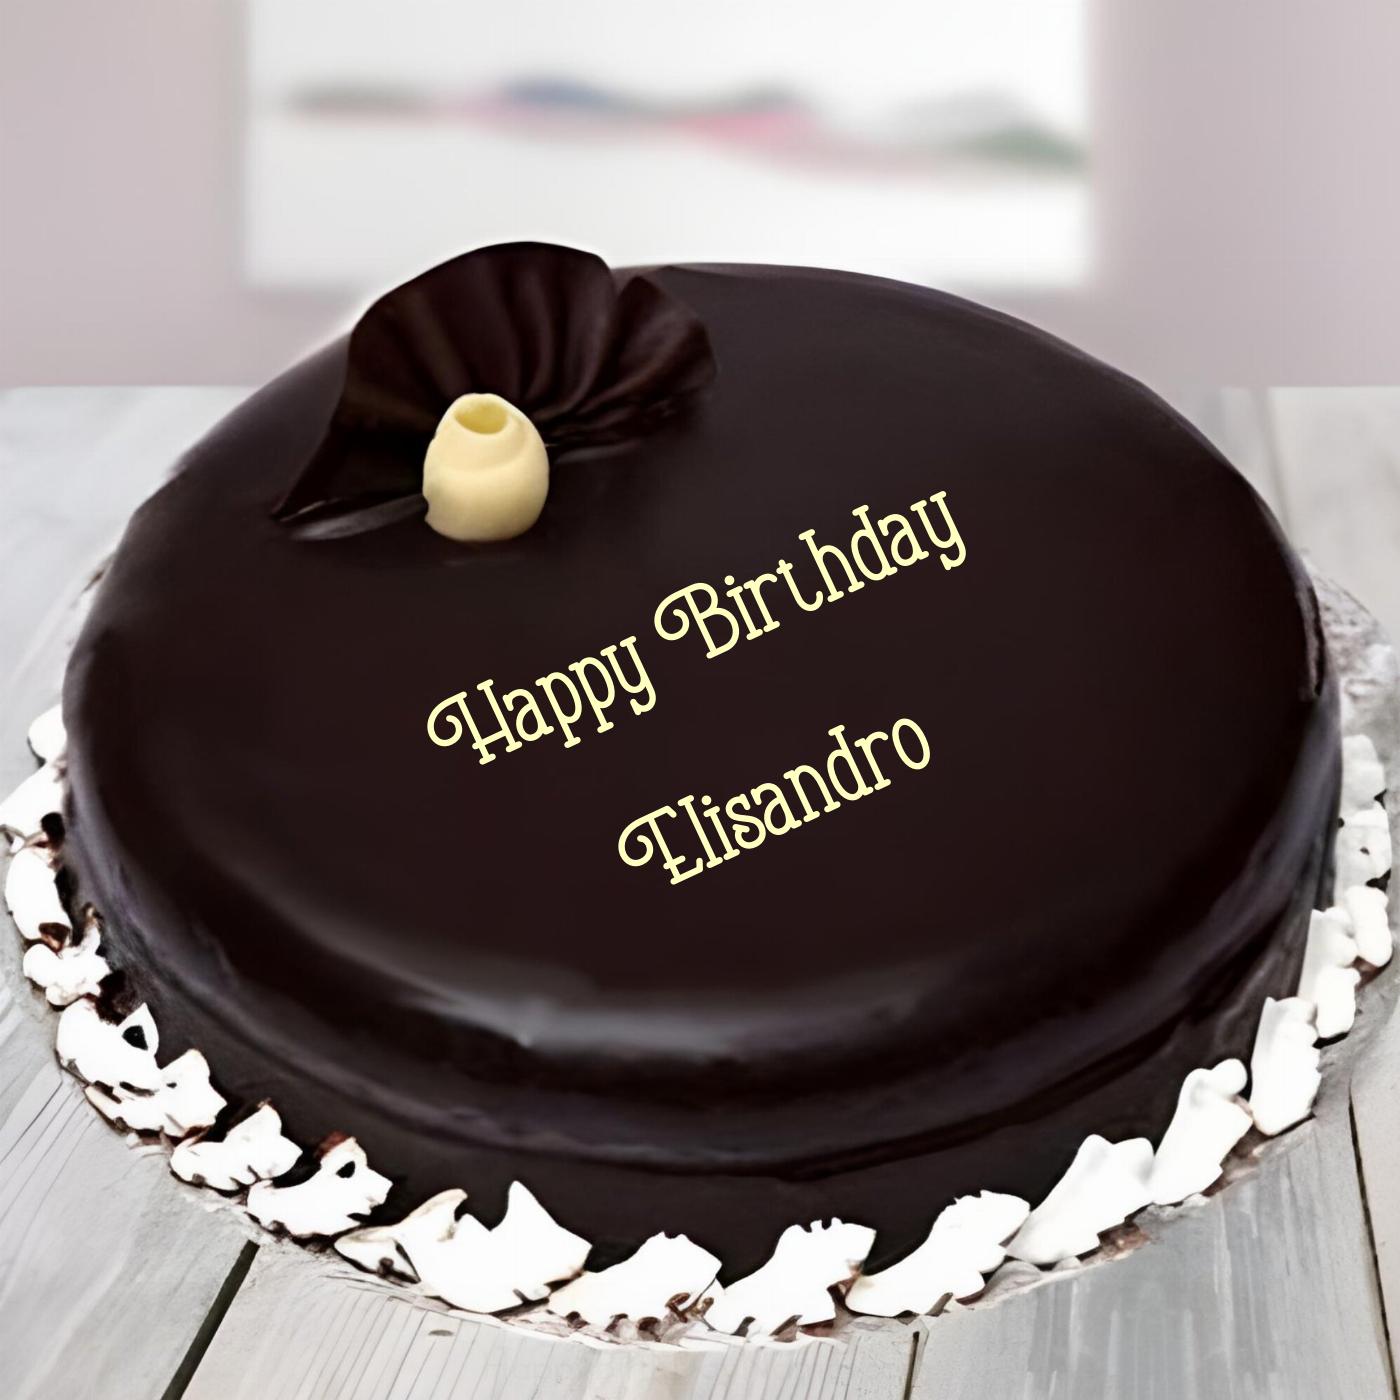 Happy Birthday Elisandro Beautiful Chocolate Cake